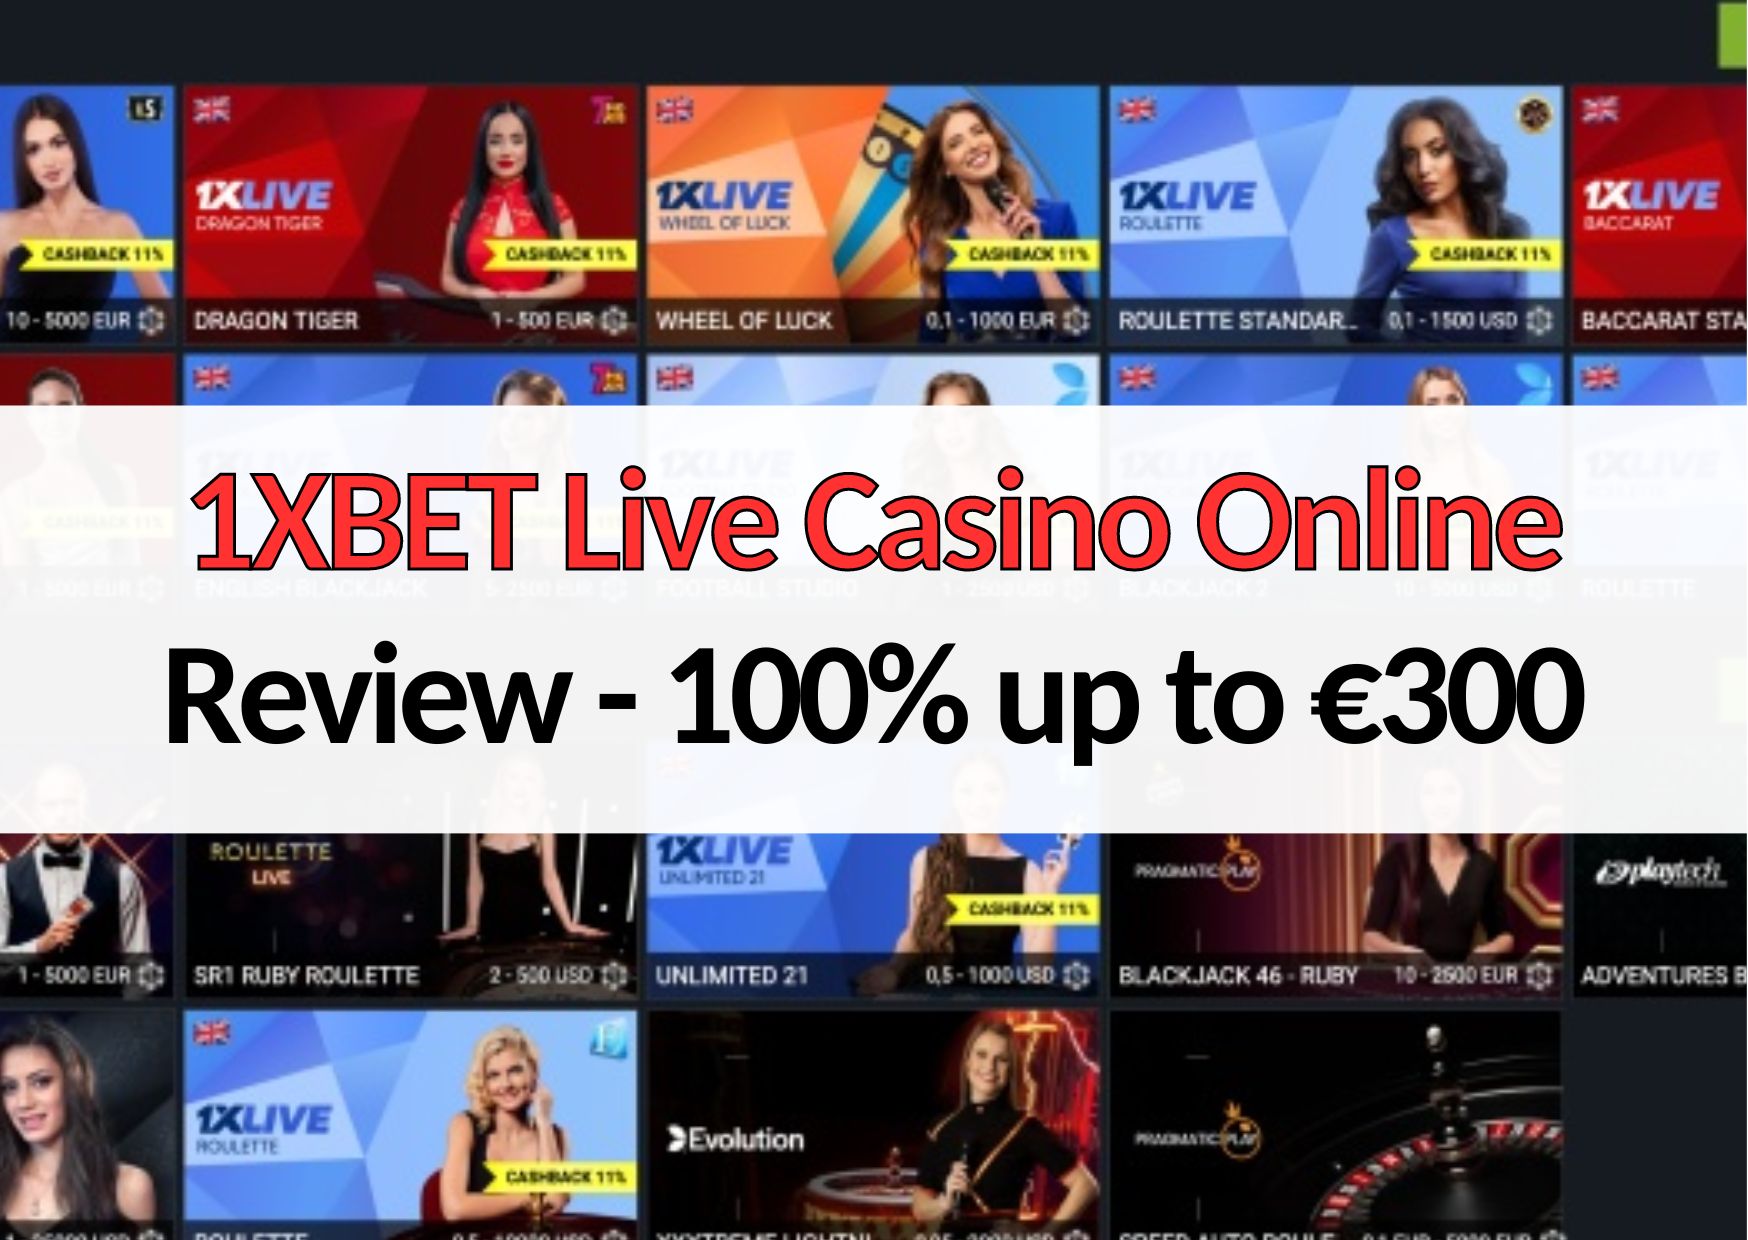 1xbet live casino online review join to get huge bonus offer